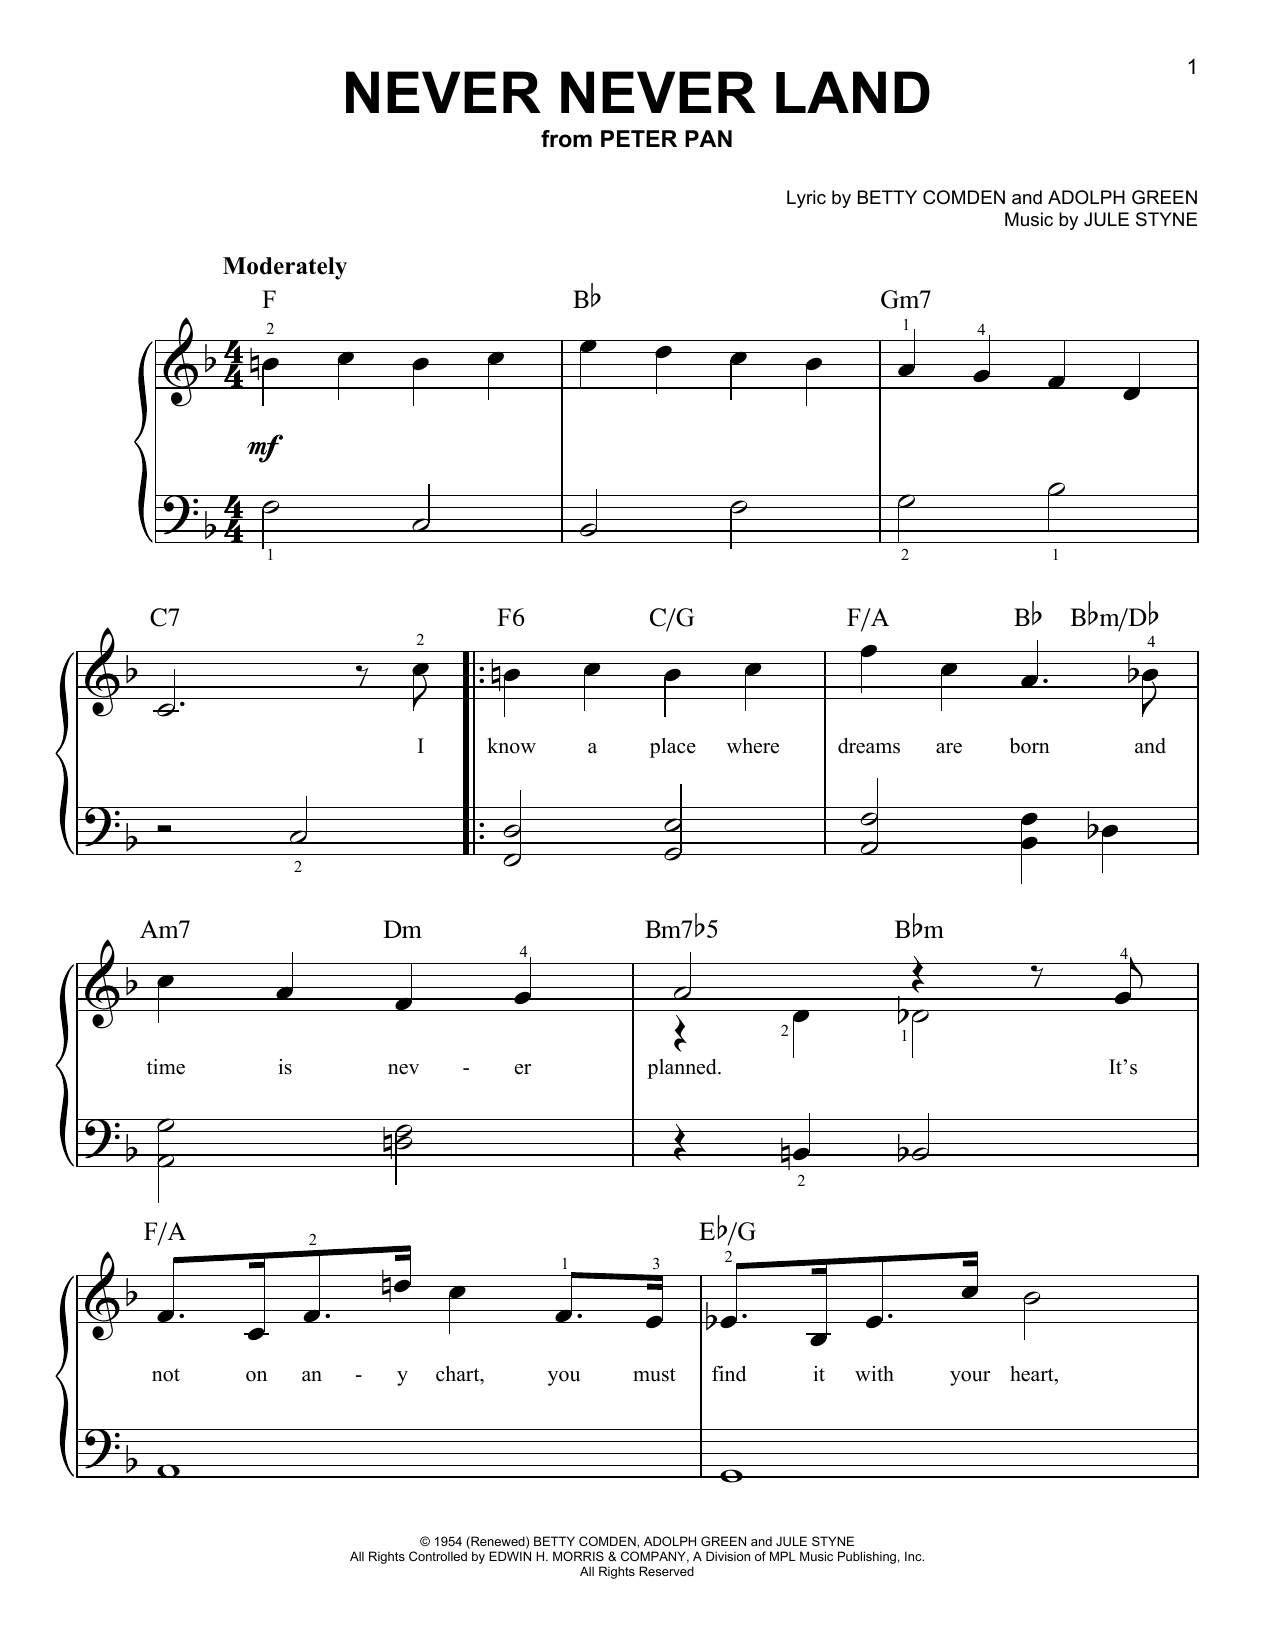 Jule Styne Never Never Land Sheet Music Notes & Chords for SPREP - Download or Print PDF